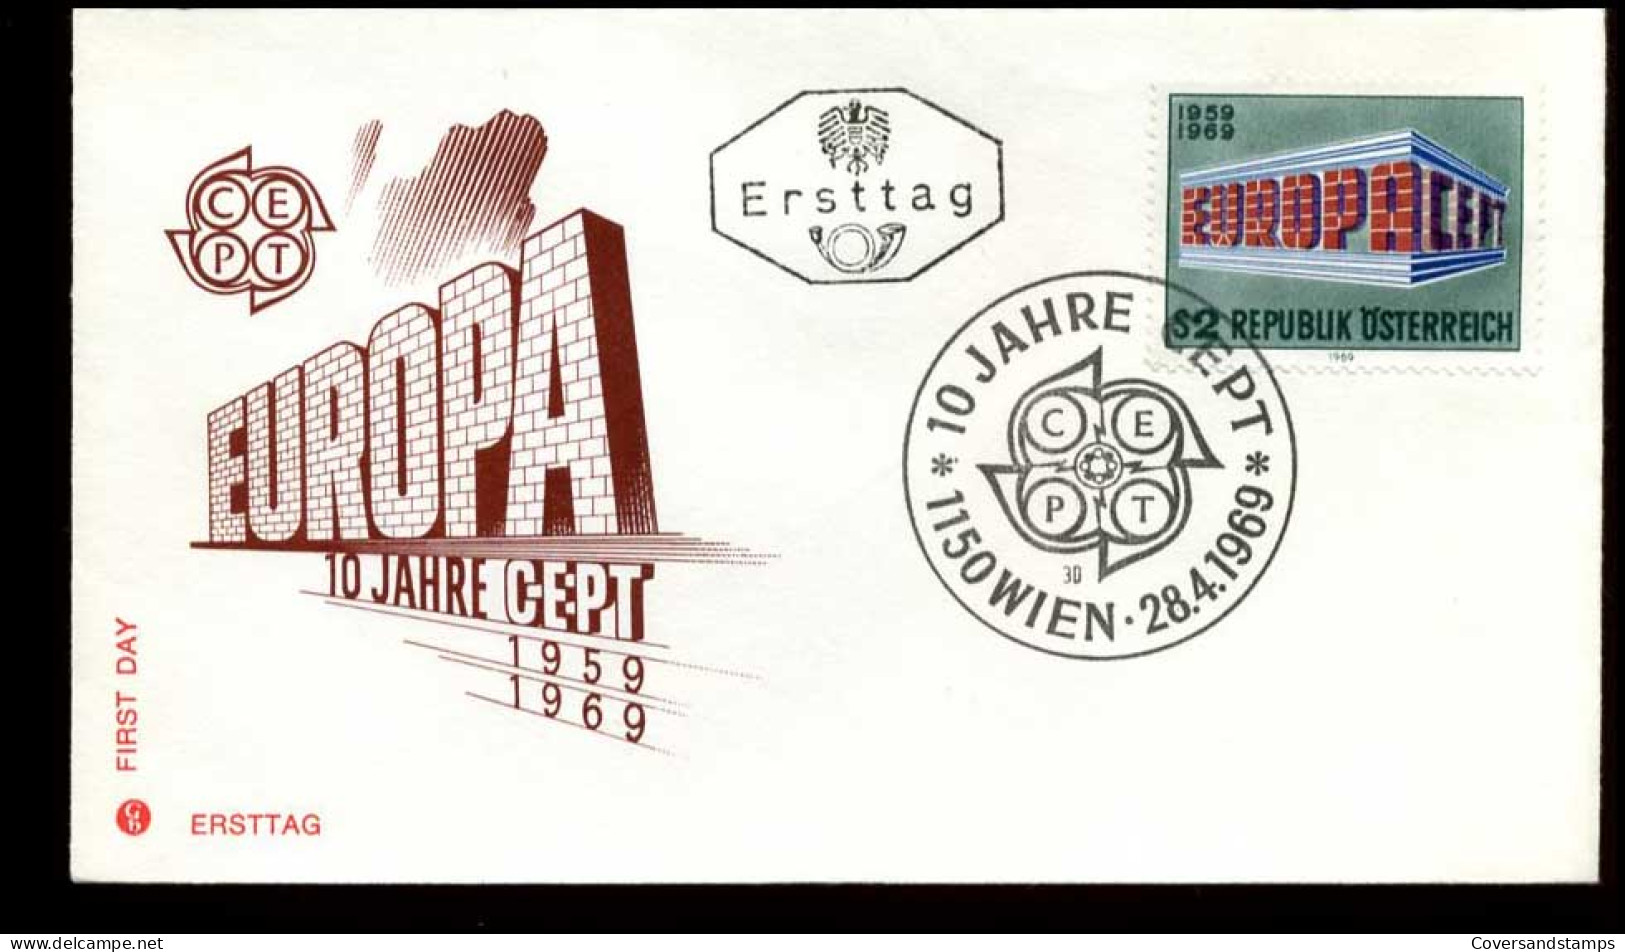  Oostenrijk - FDC - Europa CEPT 1969 - 1969